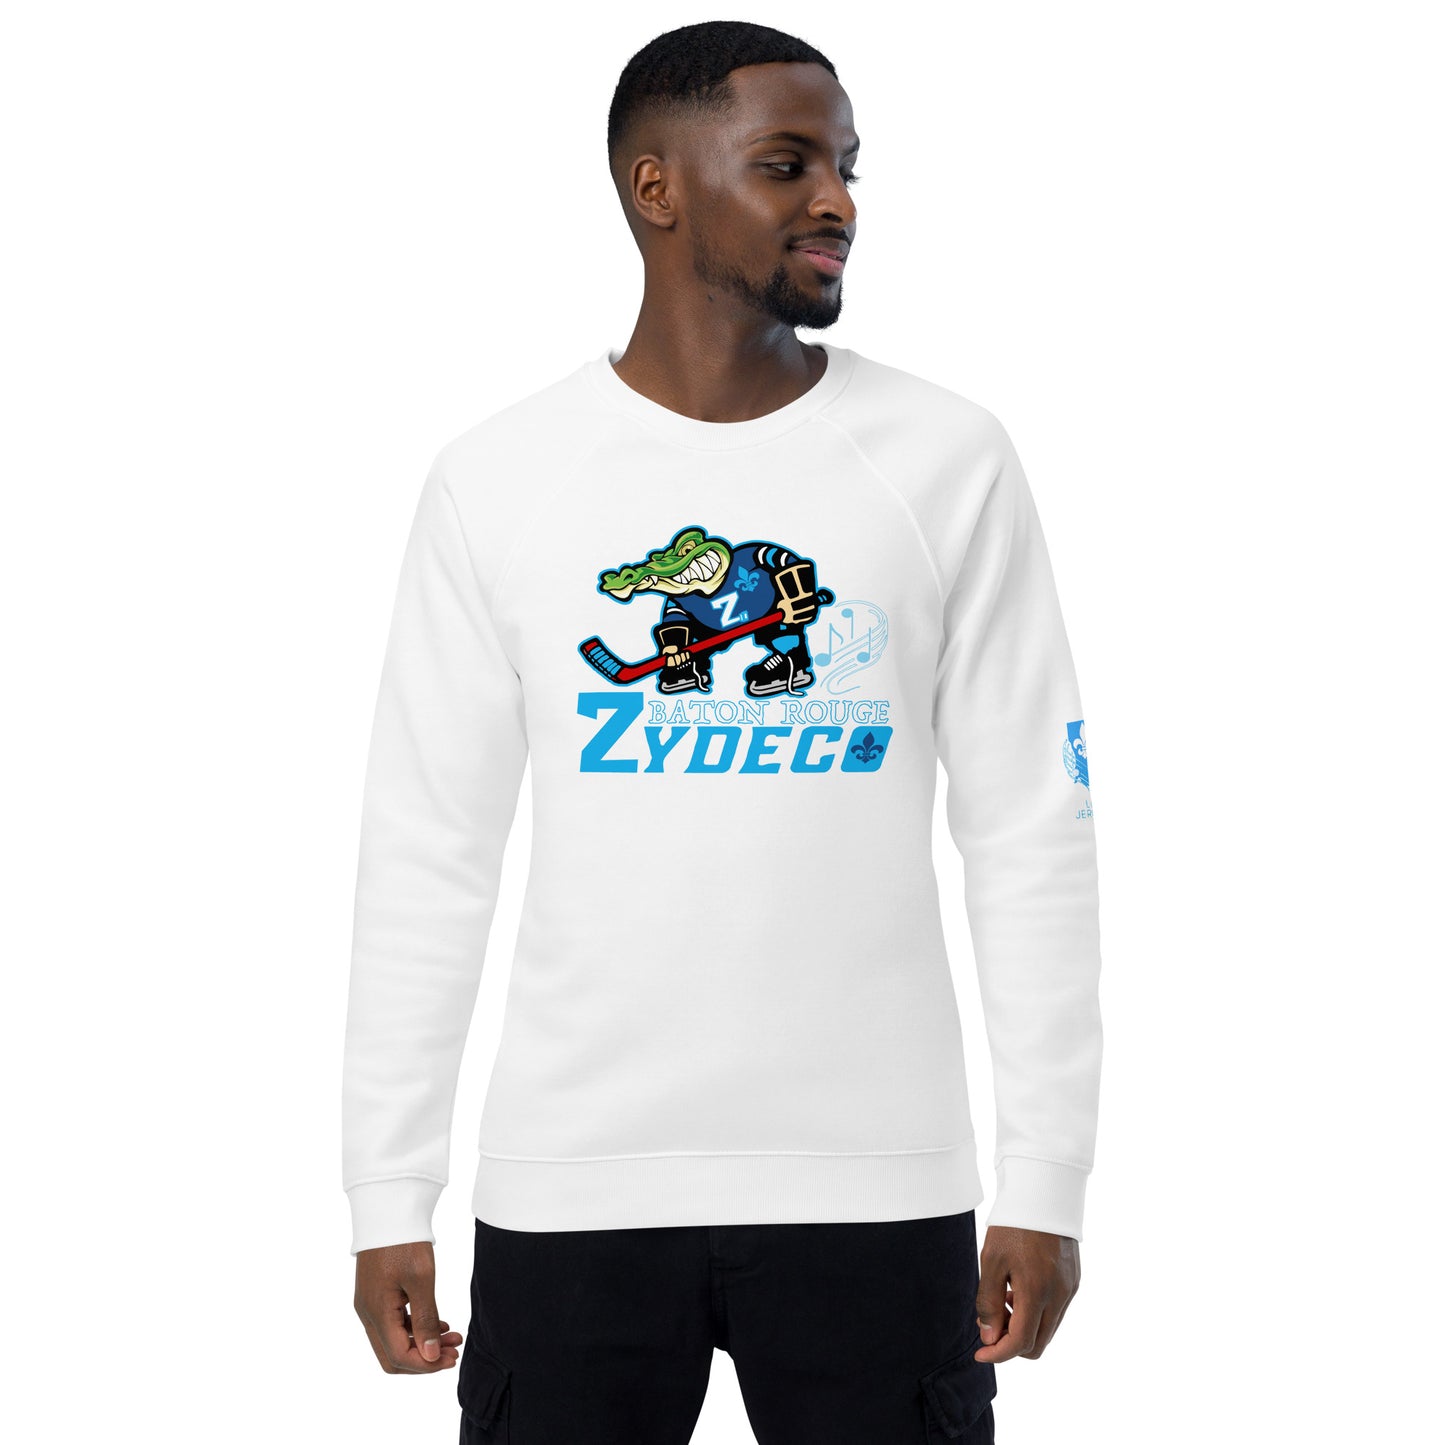 ZYDECO V1 - Unisex organic raglan sweatshirt